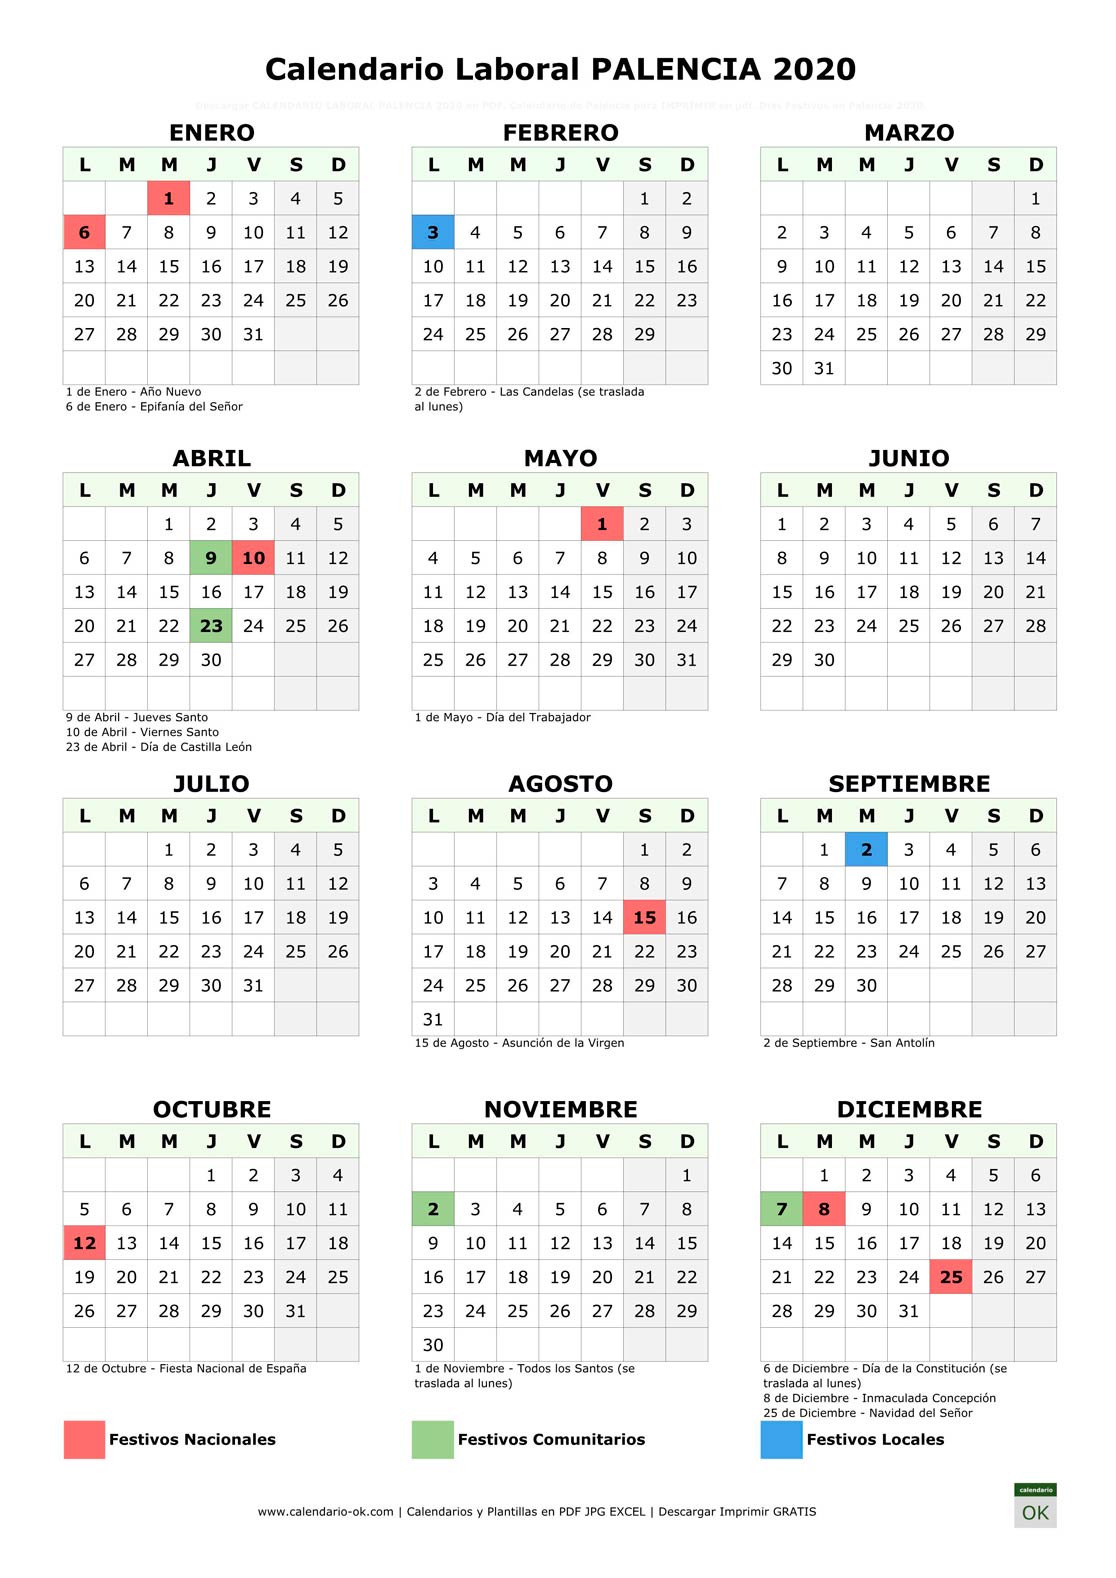 Calendario Laboral PALENCIA 2020